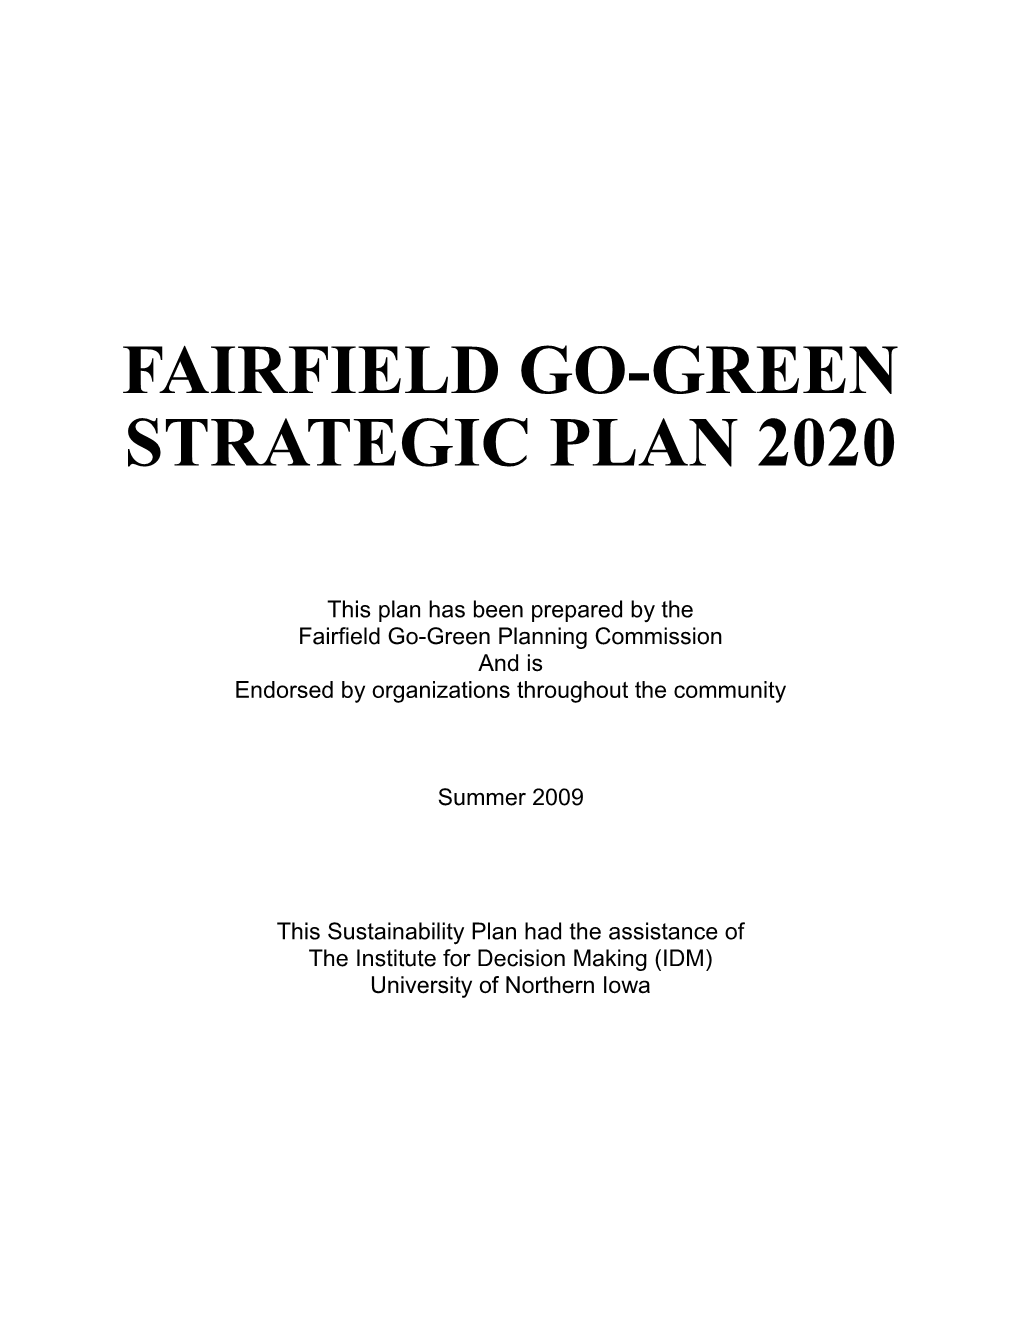 Fairfield Go-Green Strategic Plan 2020